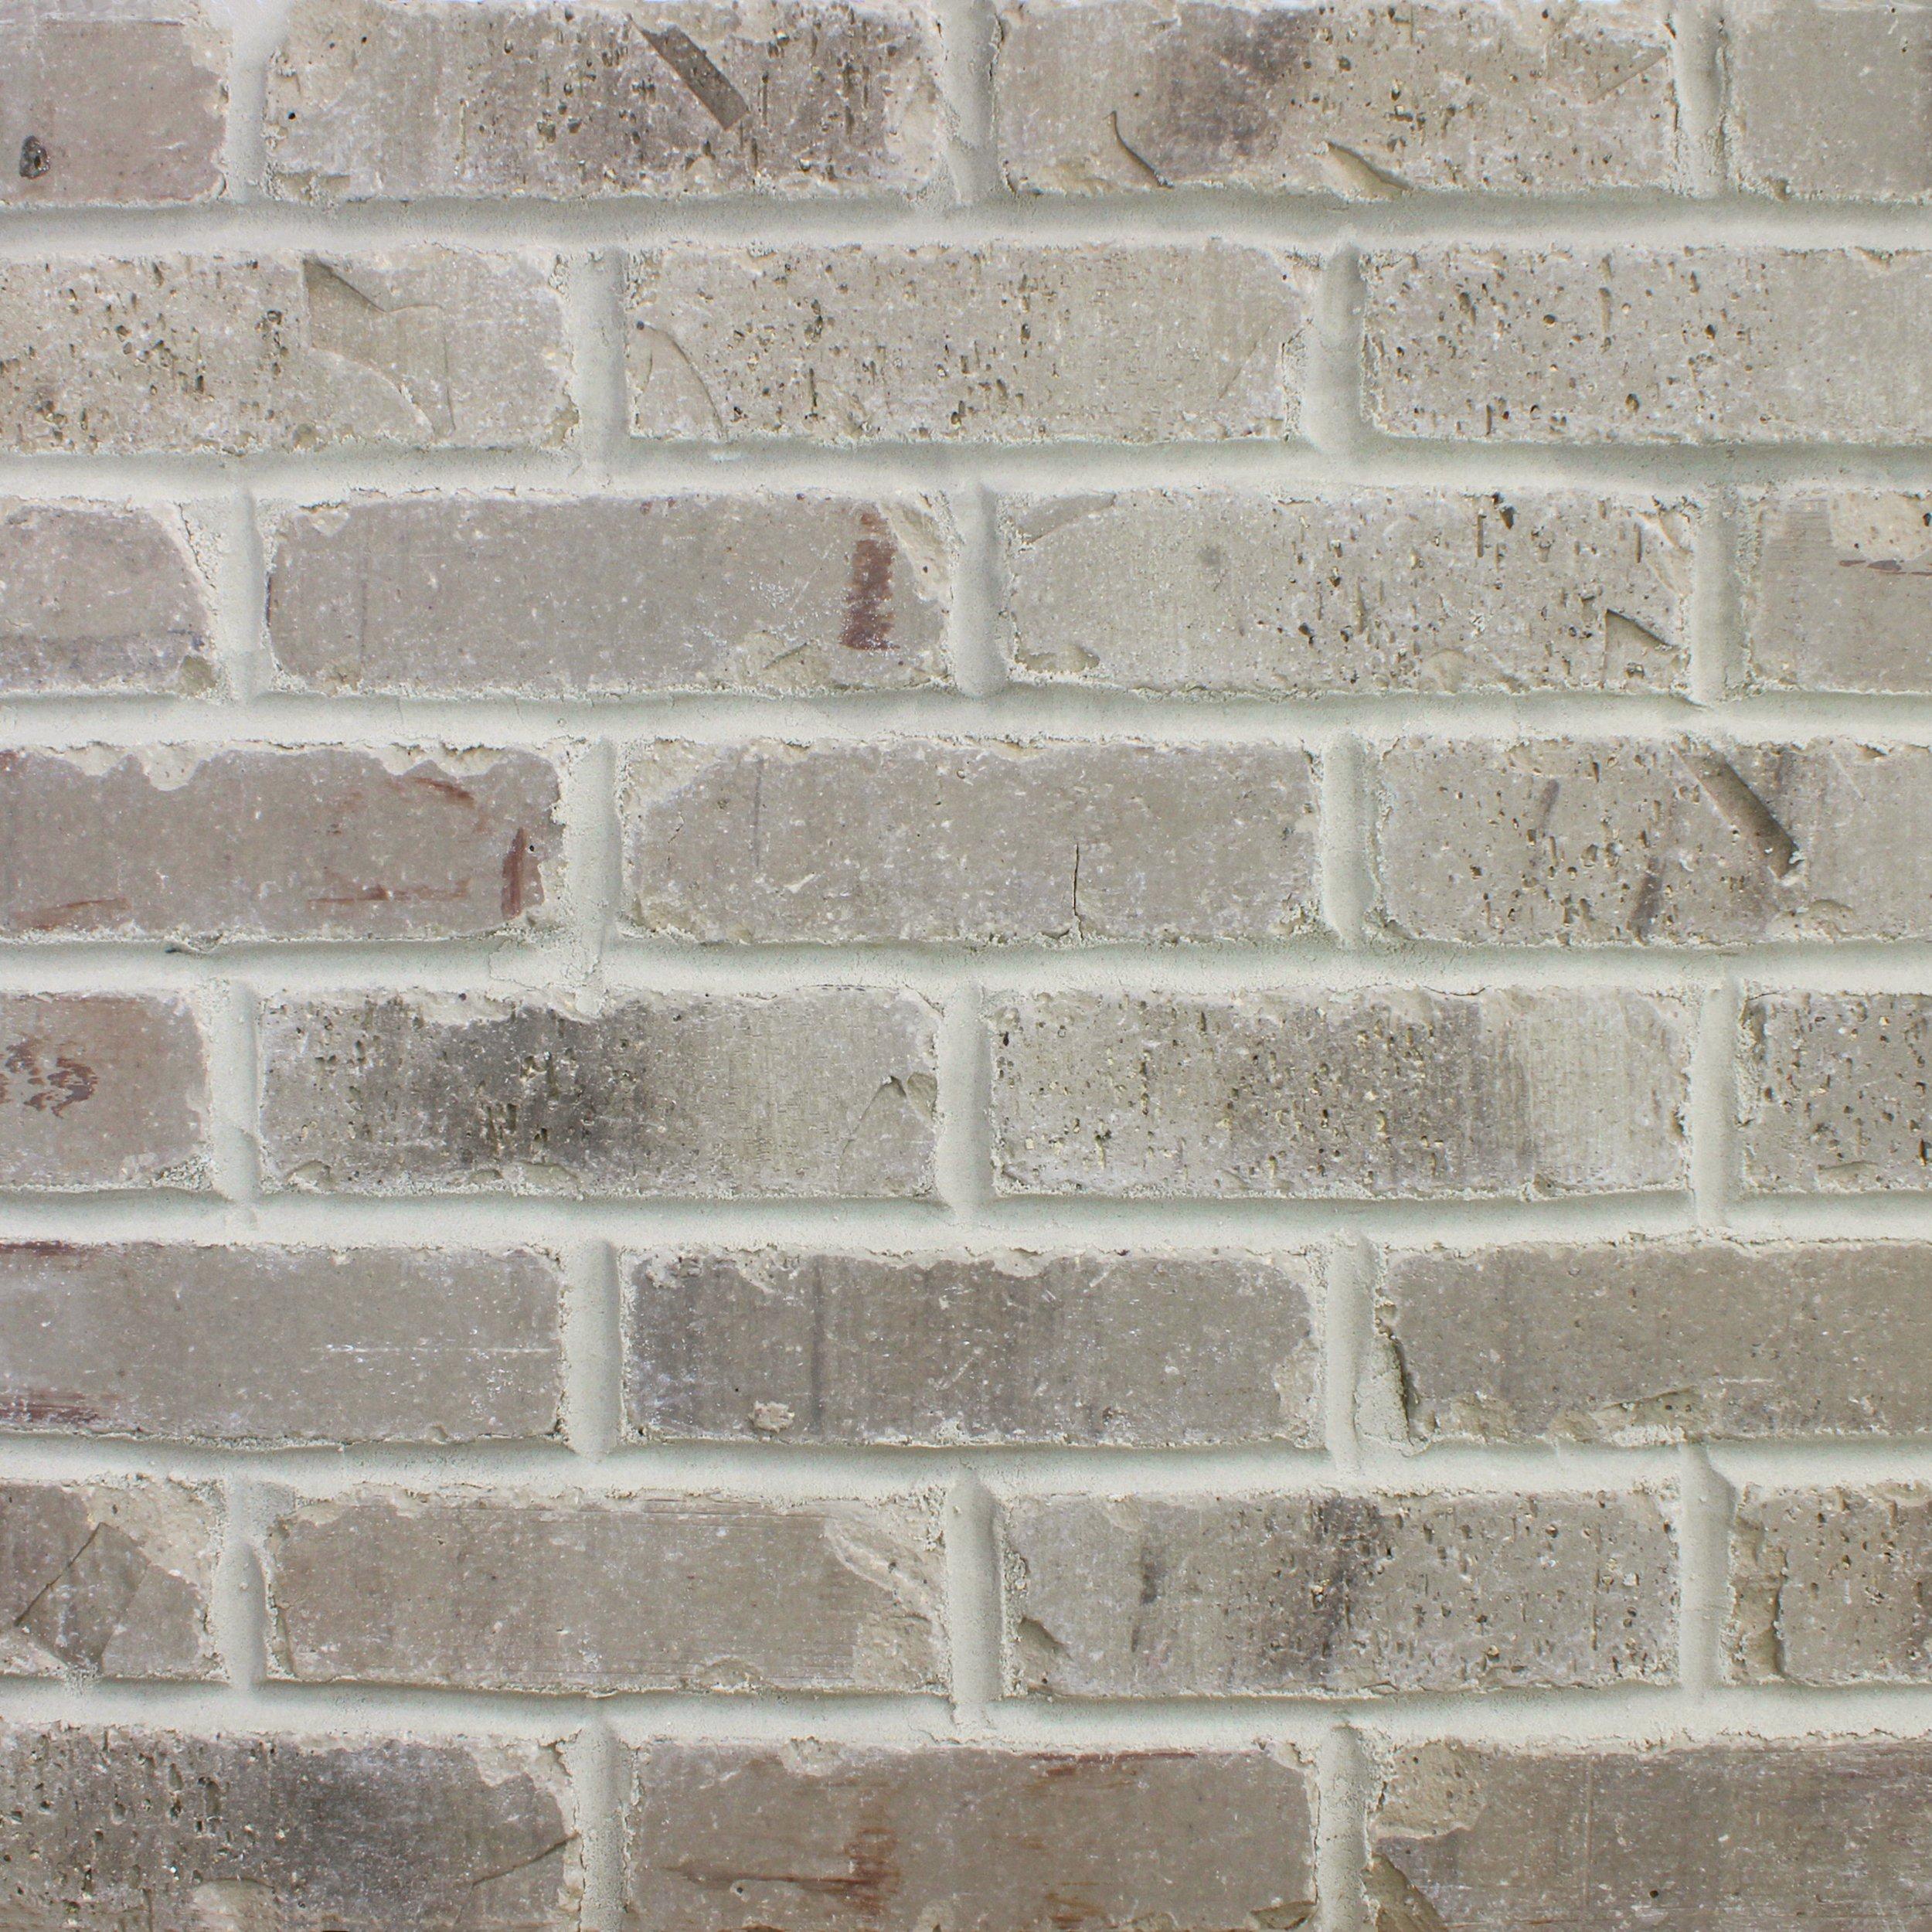 Olympus Thin Brick Panel